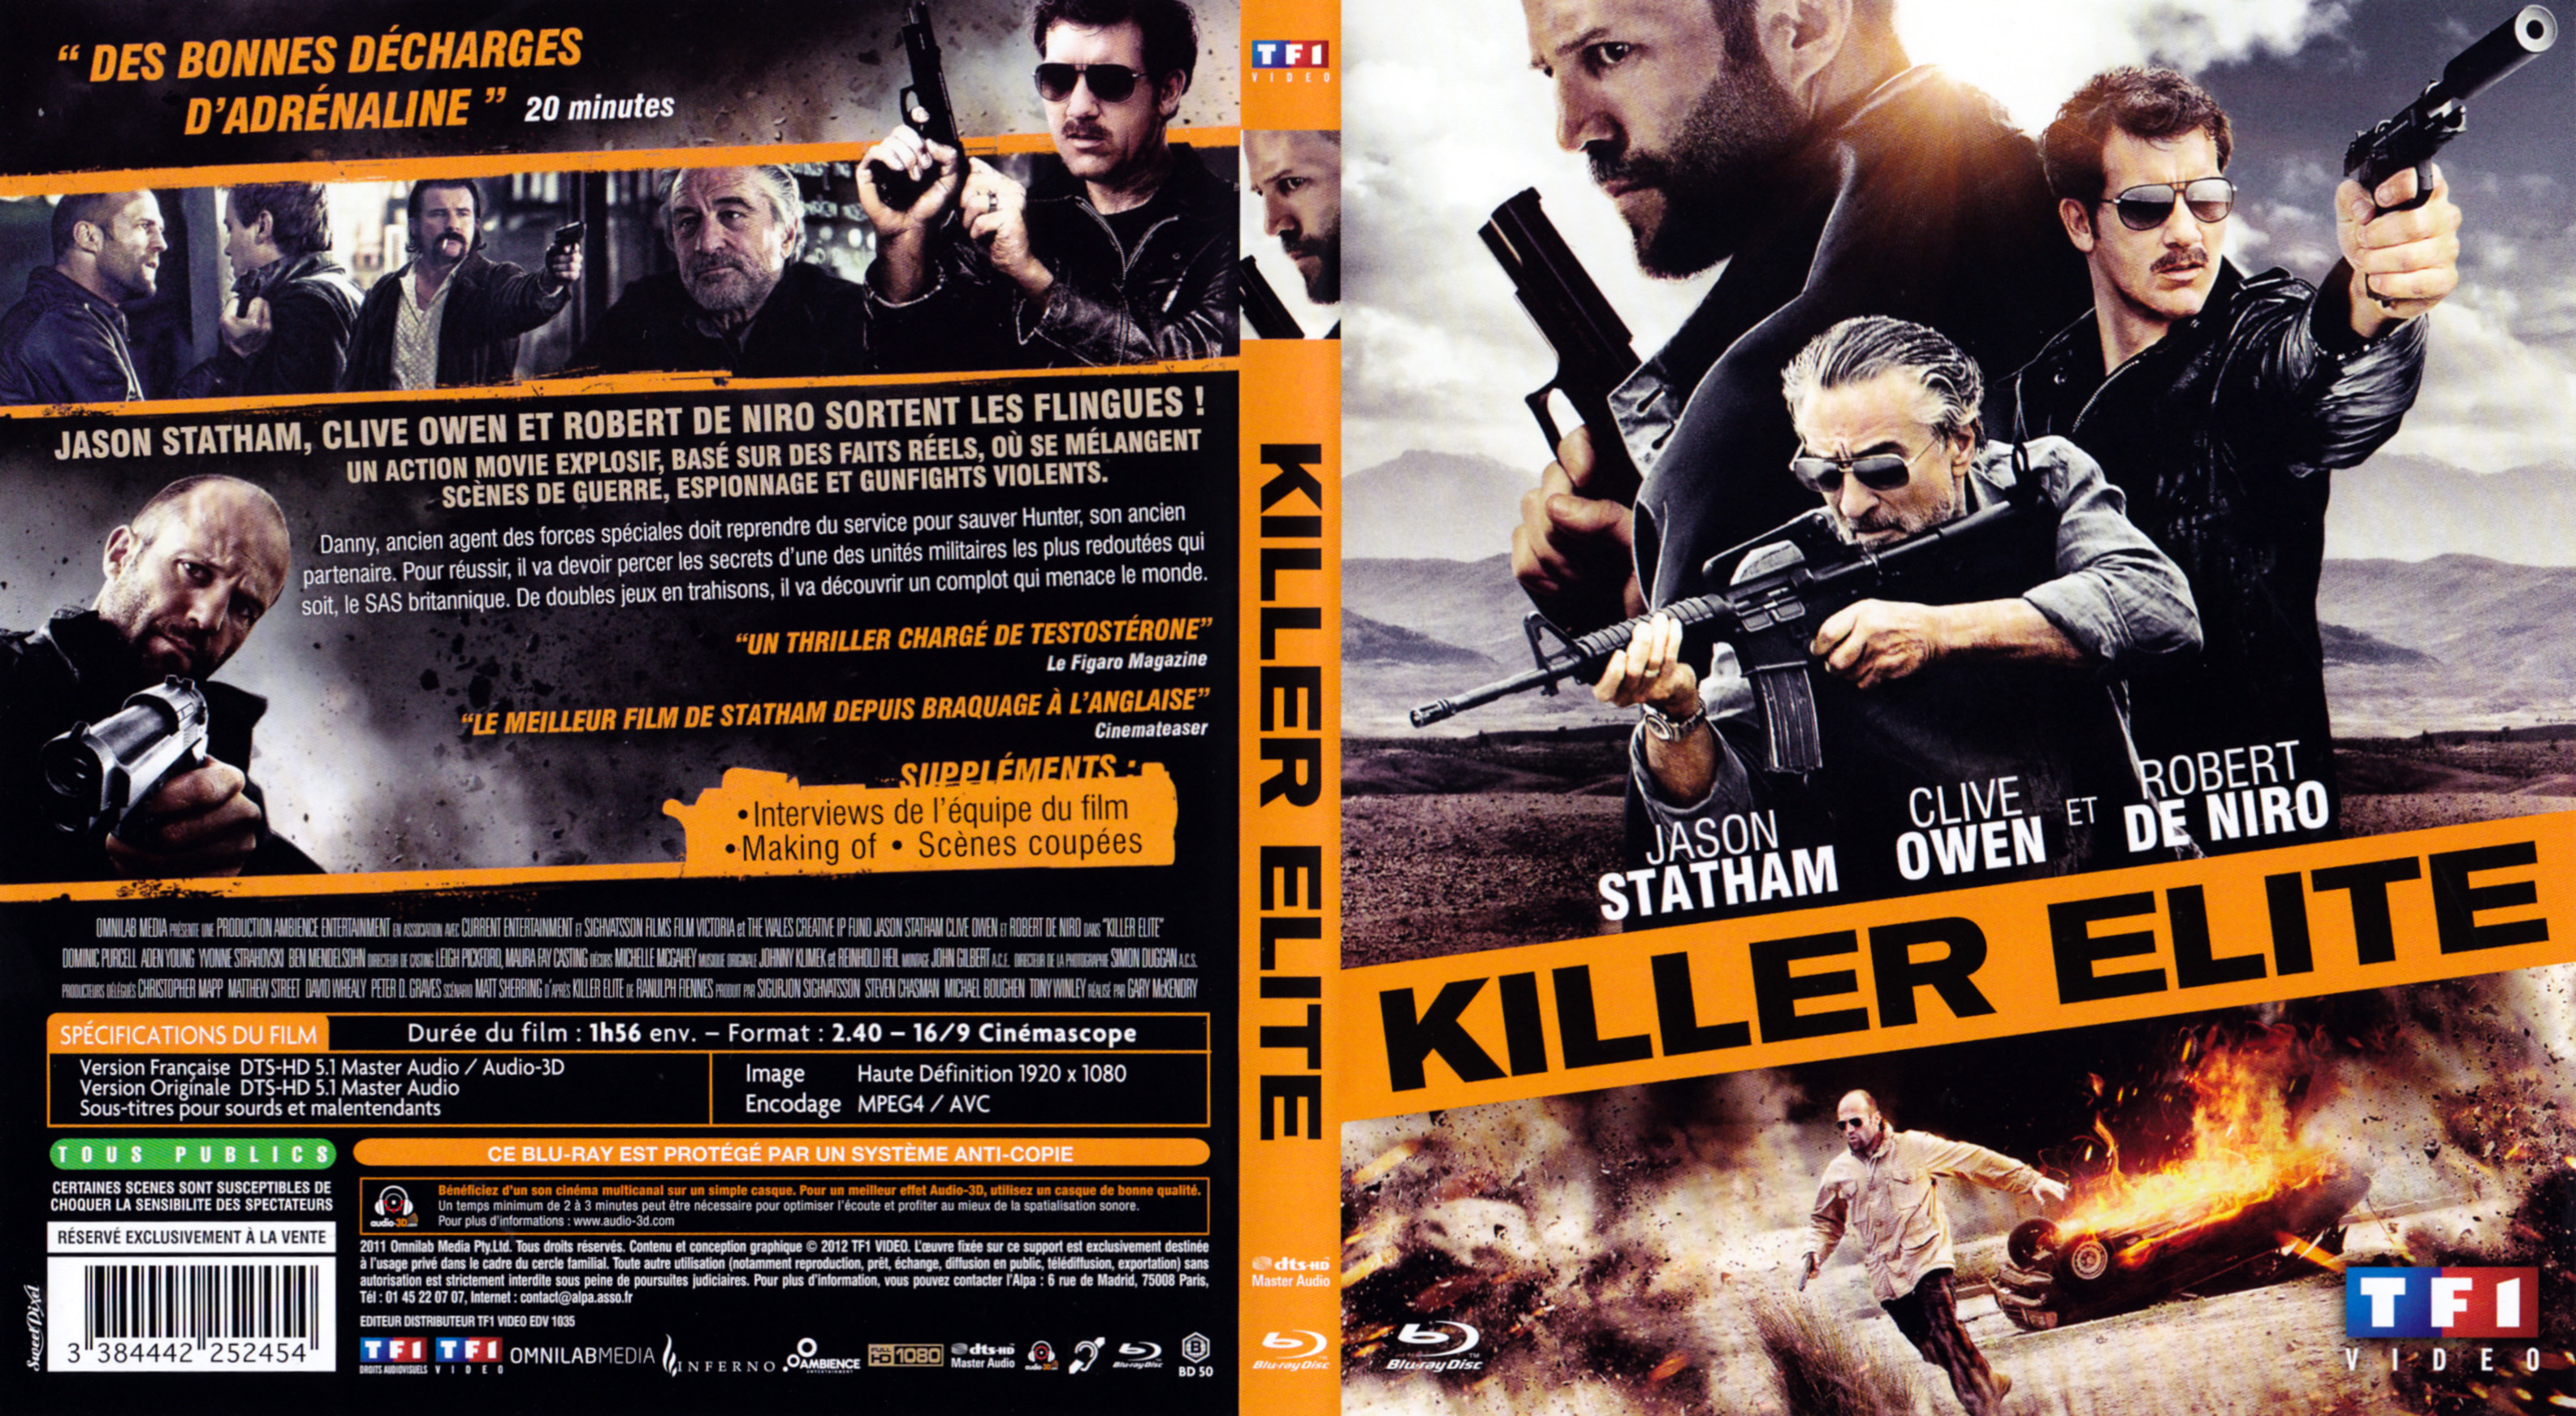 Jaquette DVD Killer elite (BLU-RAY)